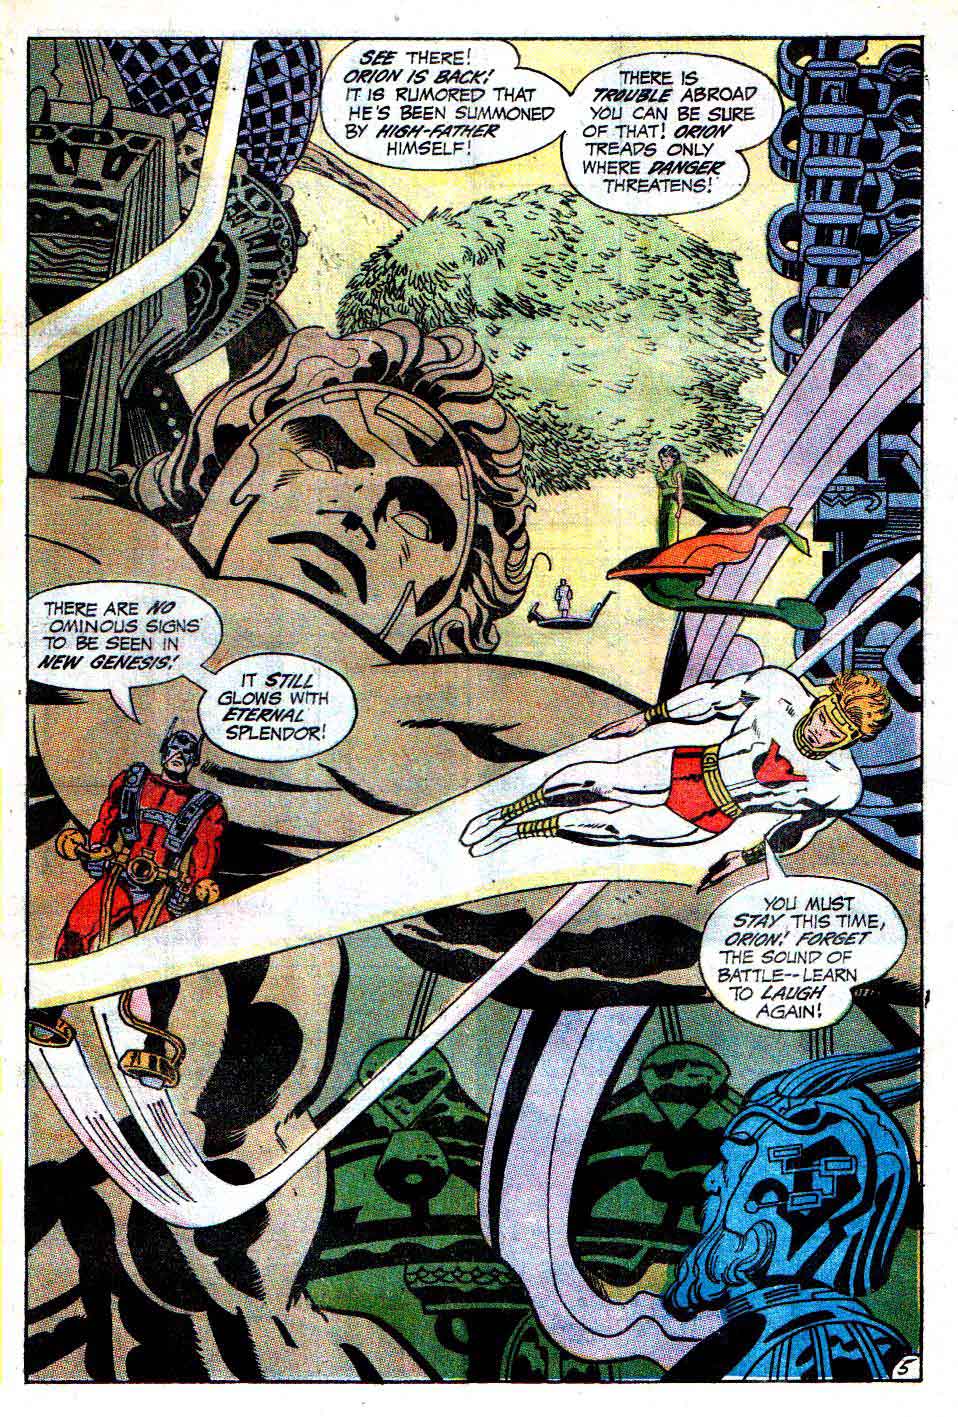 Jack Kirby DC 1970s bronze age comic book page art, New Gods v1 #1